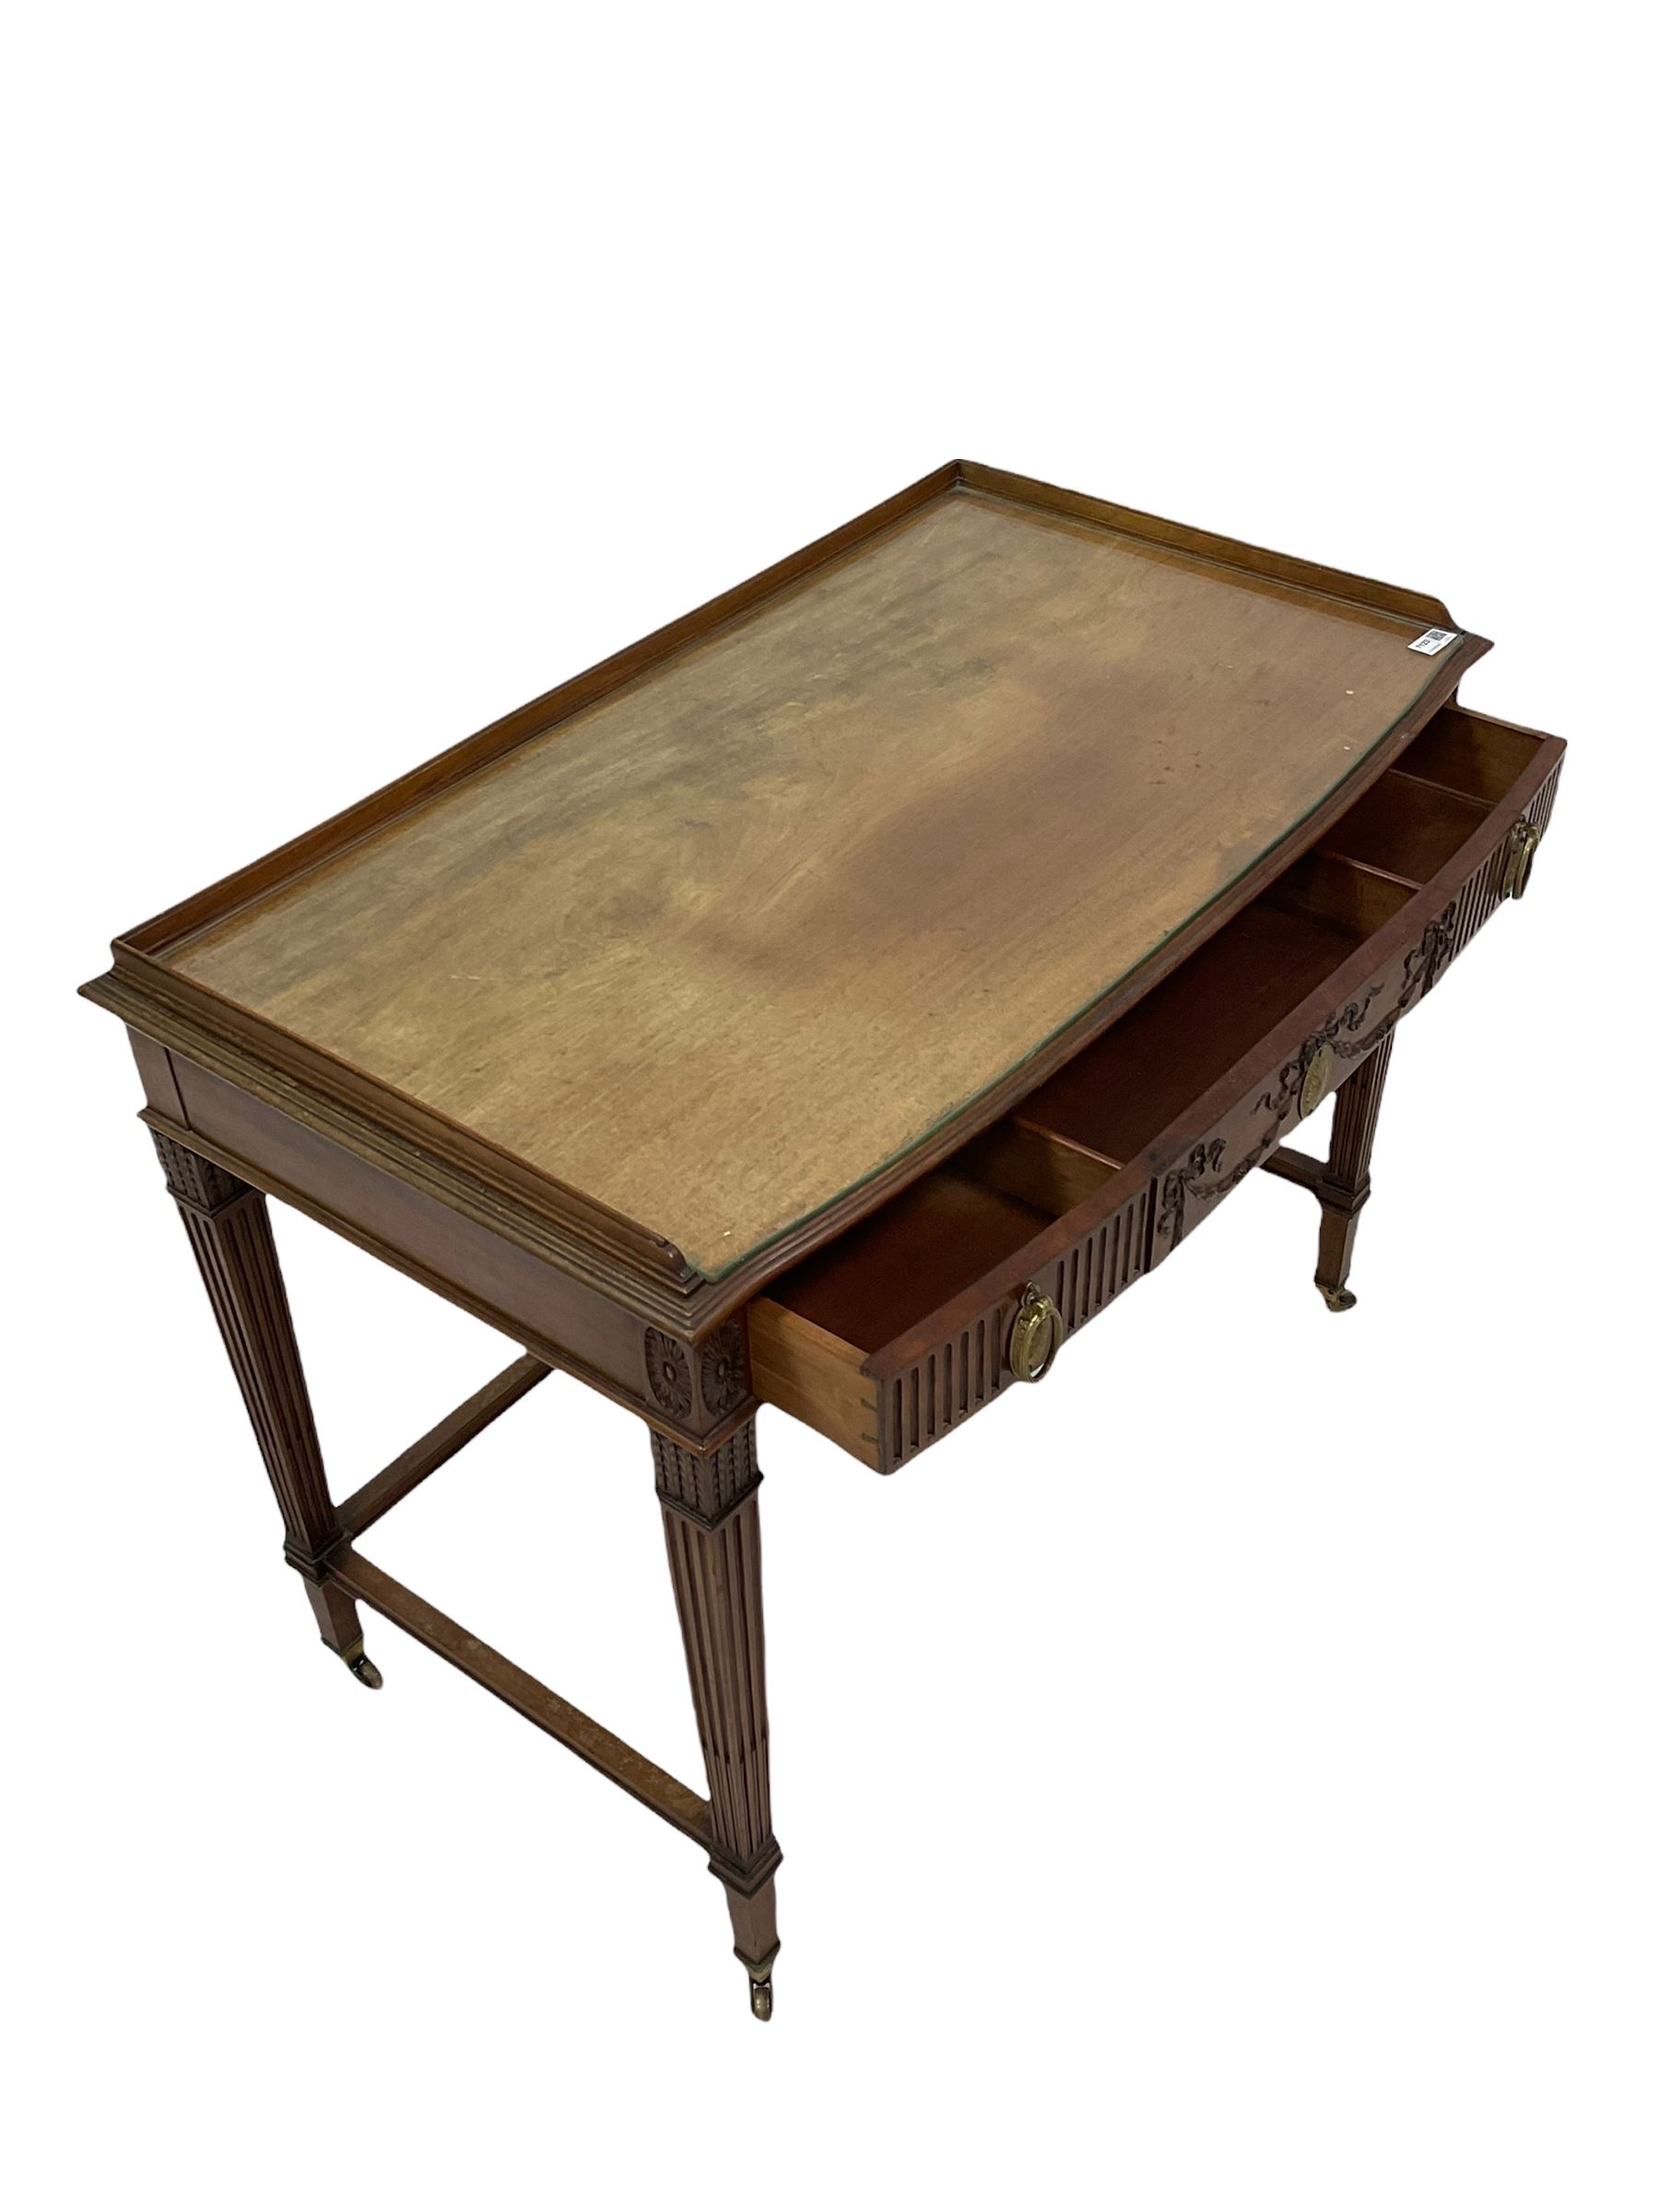 Morison & Co of Edinburgh - Mahogany writing table - Image 3 of 4